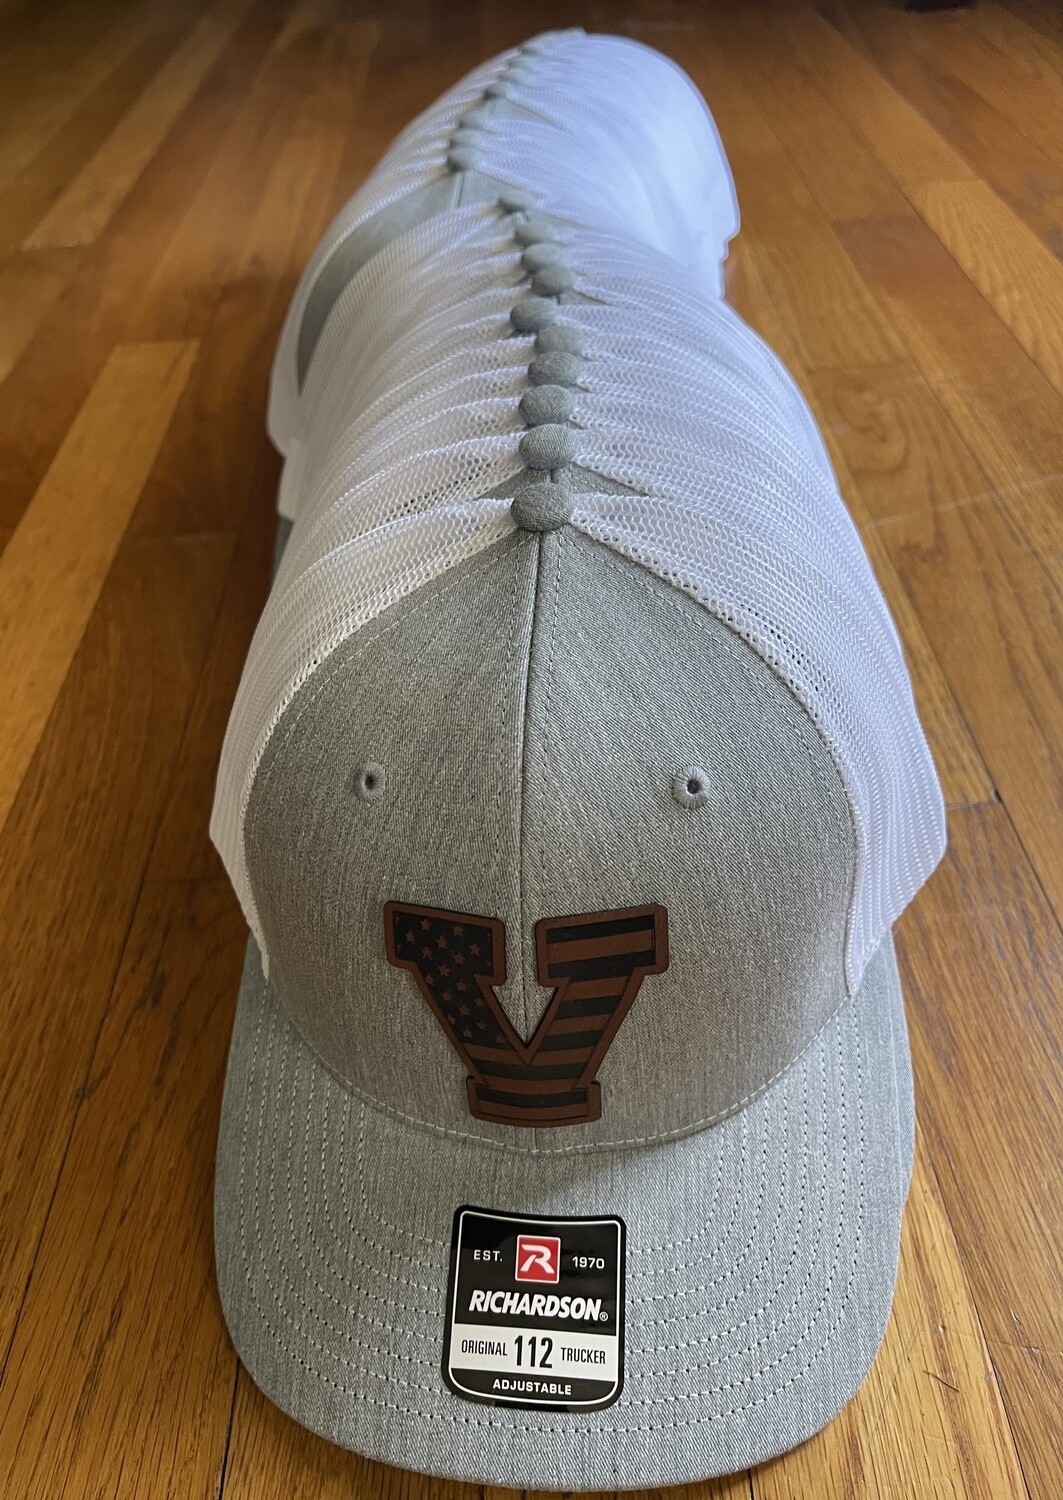 Veteran's "V" Leather Patch Hats